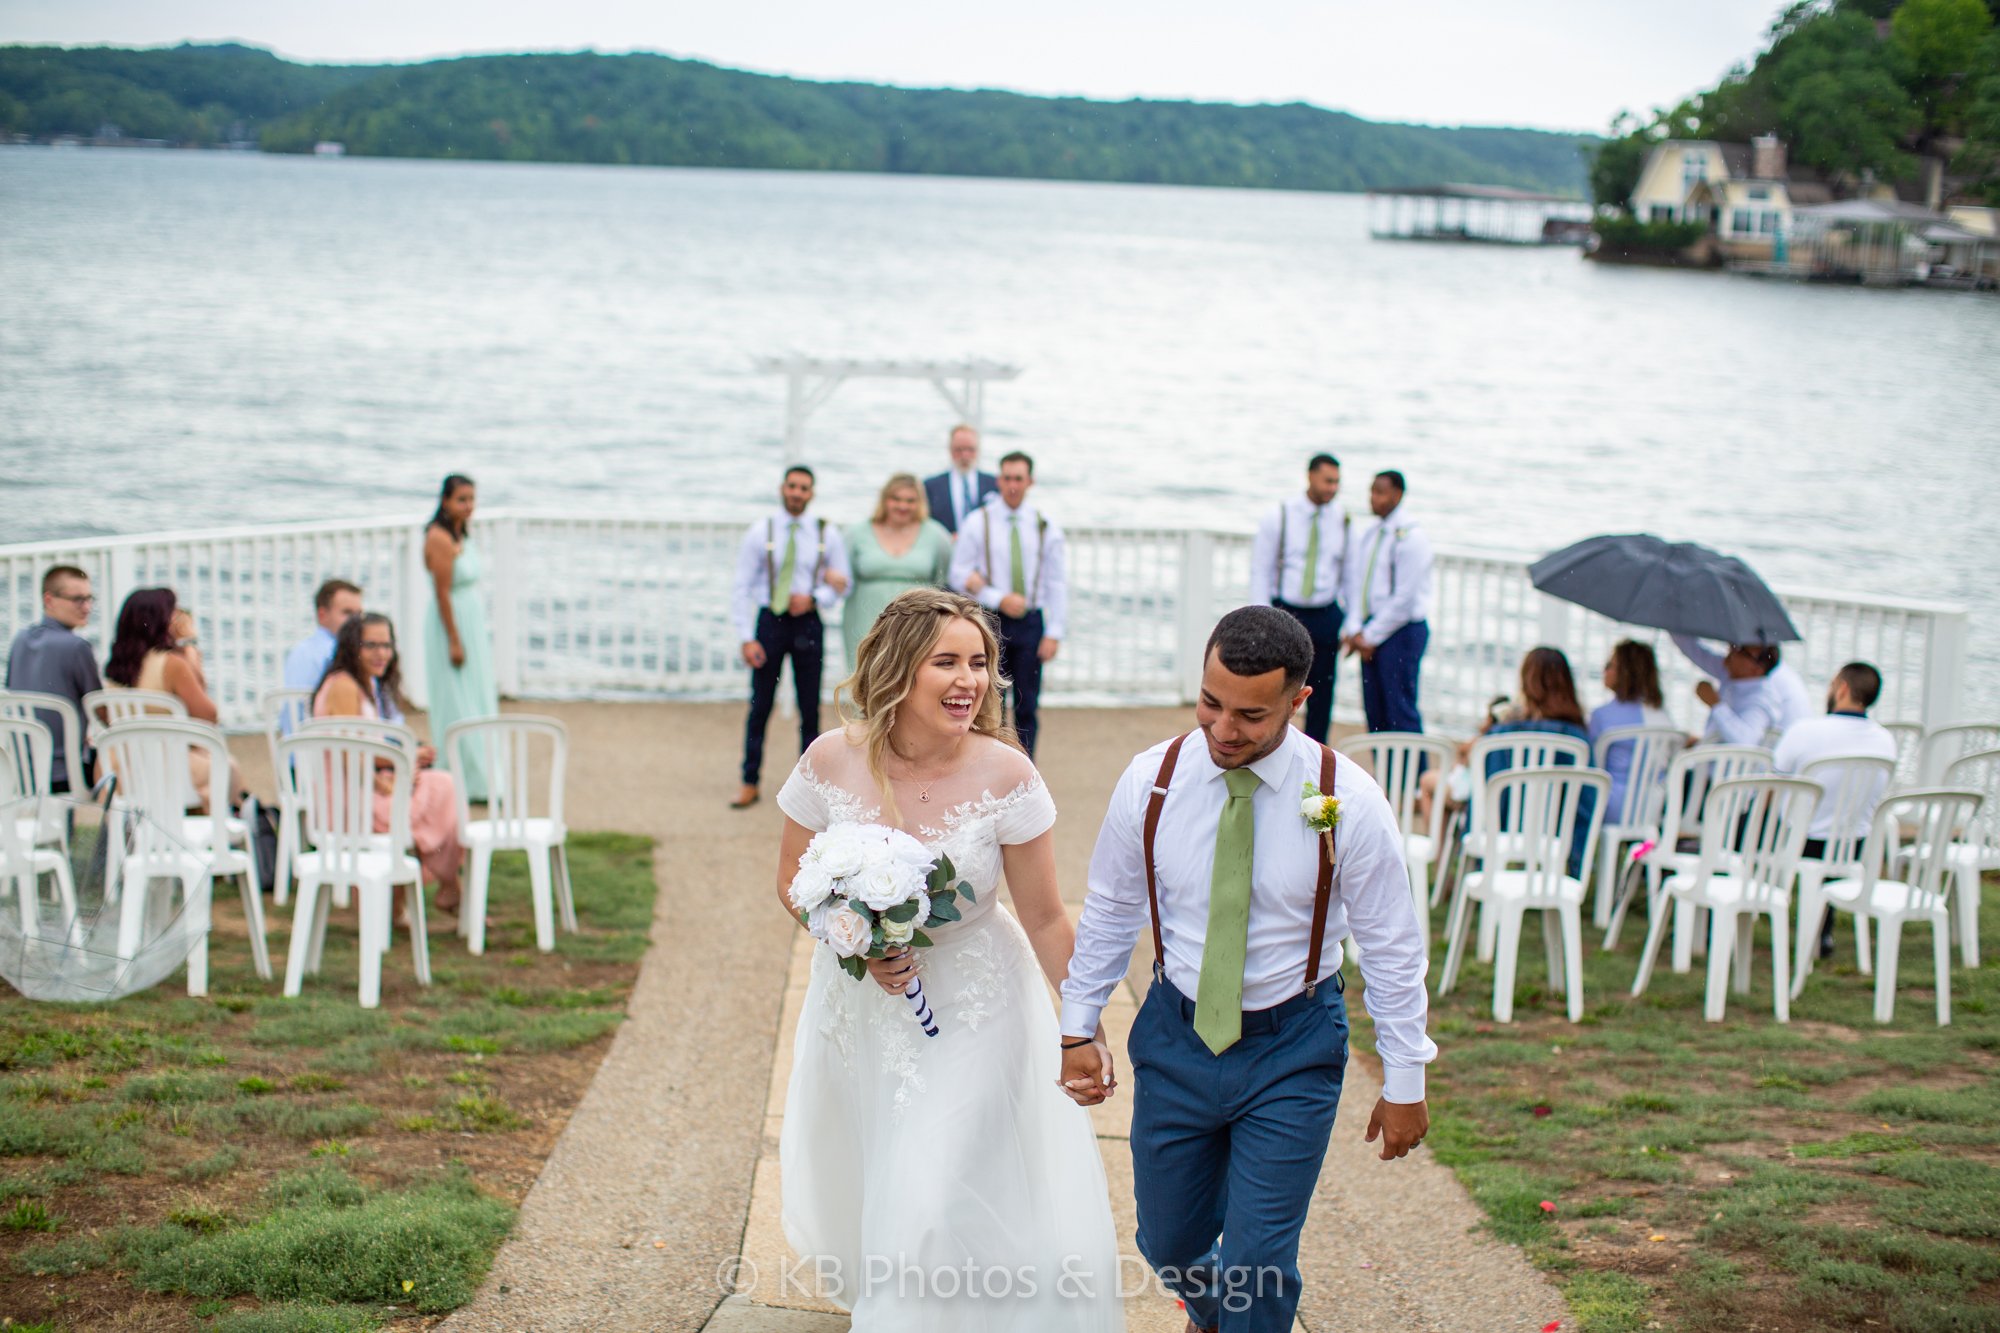 Abbi-Daniel-Wedding-Lake-of-the-Ozarks-Margaritaville-Missouri-Jefferson-City-wedding-photos-KB-Photos-and-Design-562.jpg